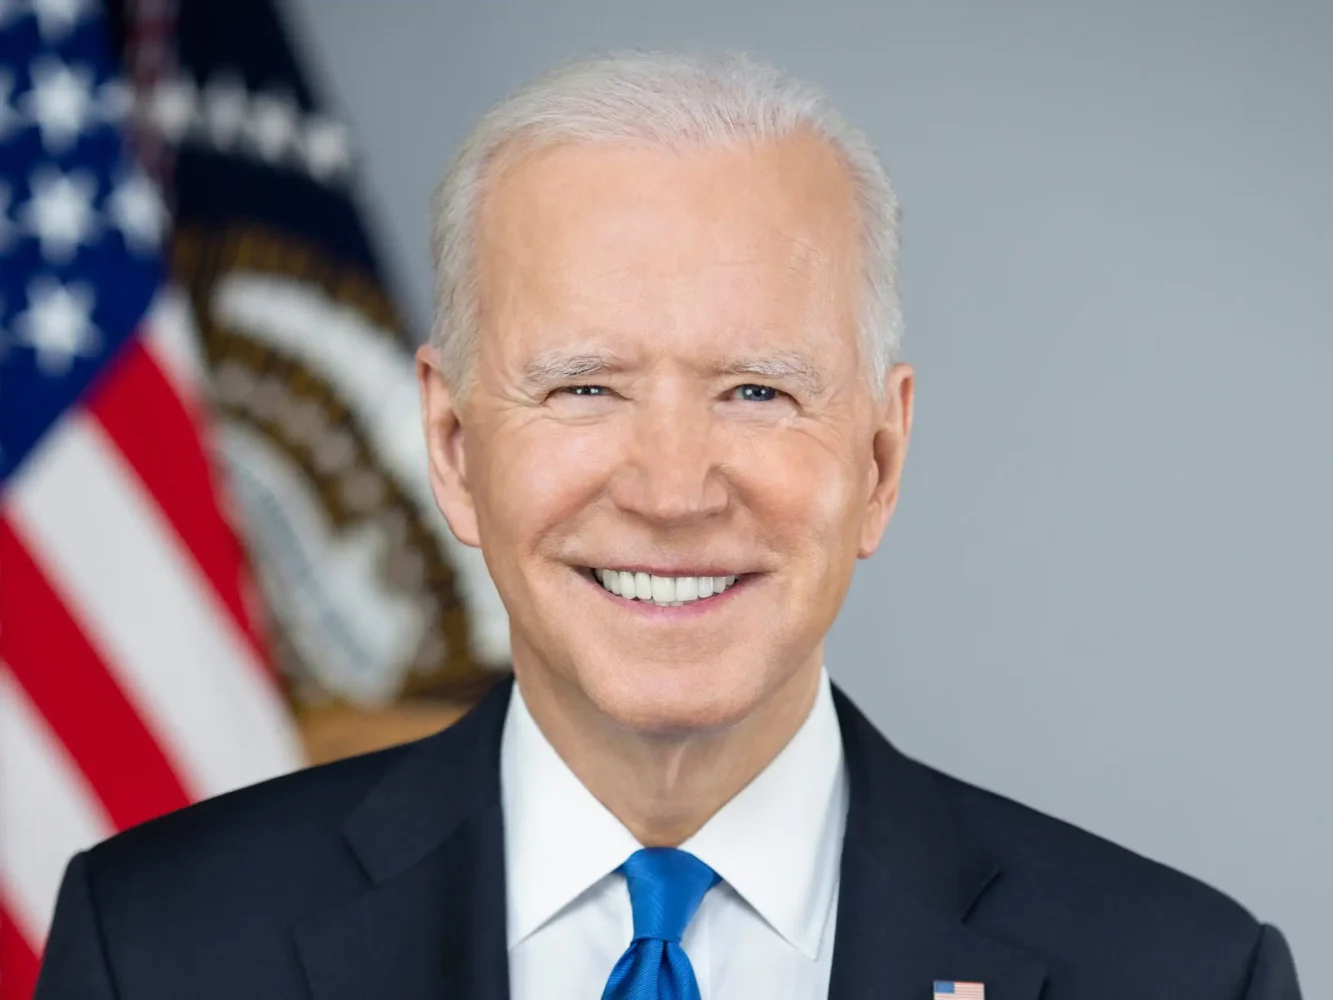 Joe Biden tests positive for COVID-19